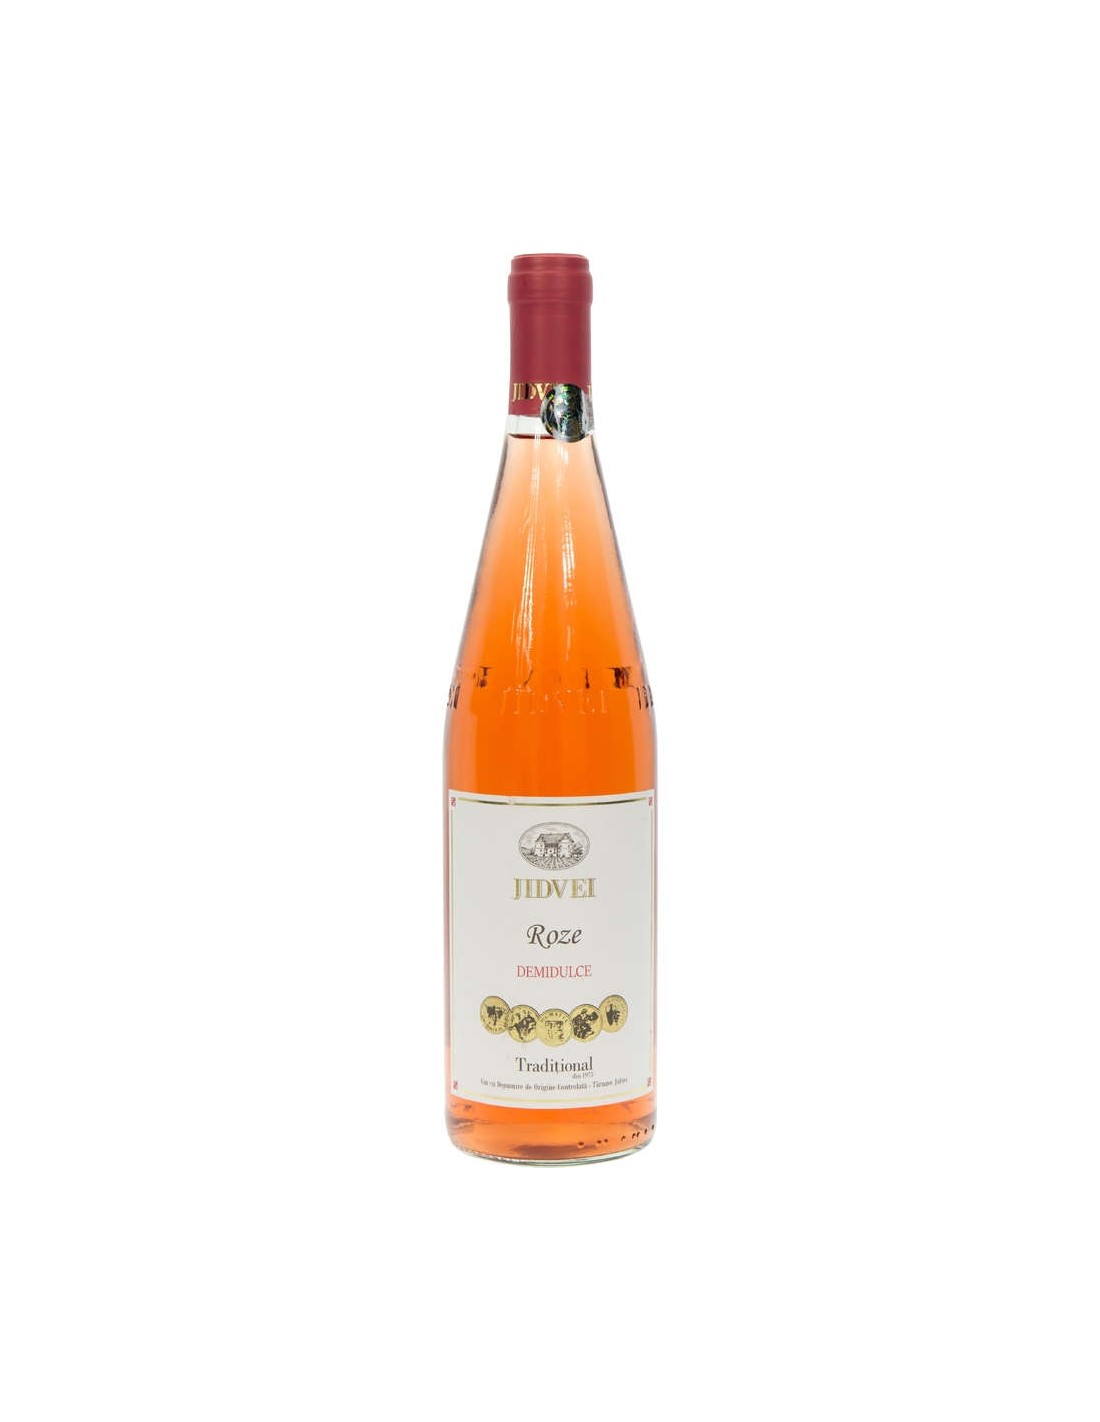 Vin roze demidulce, Cupaj, Jidvei Traditional, 12.5% alc., 0.75L, Romania alcooldiscount.ro